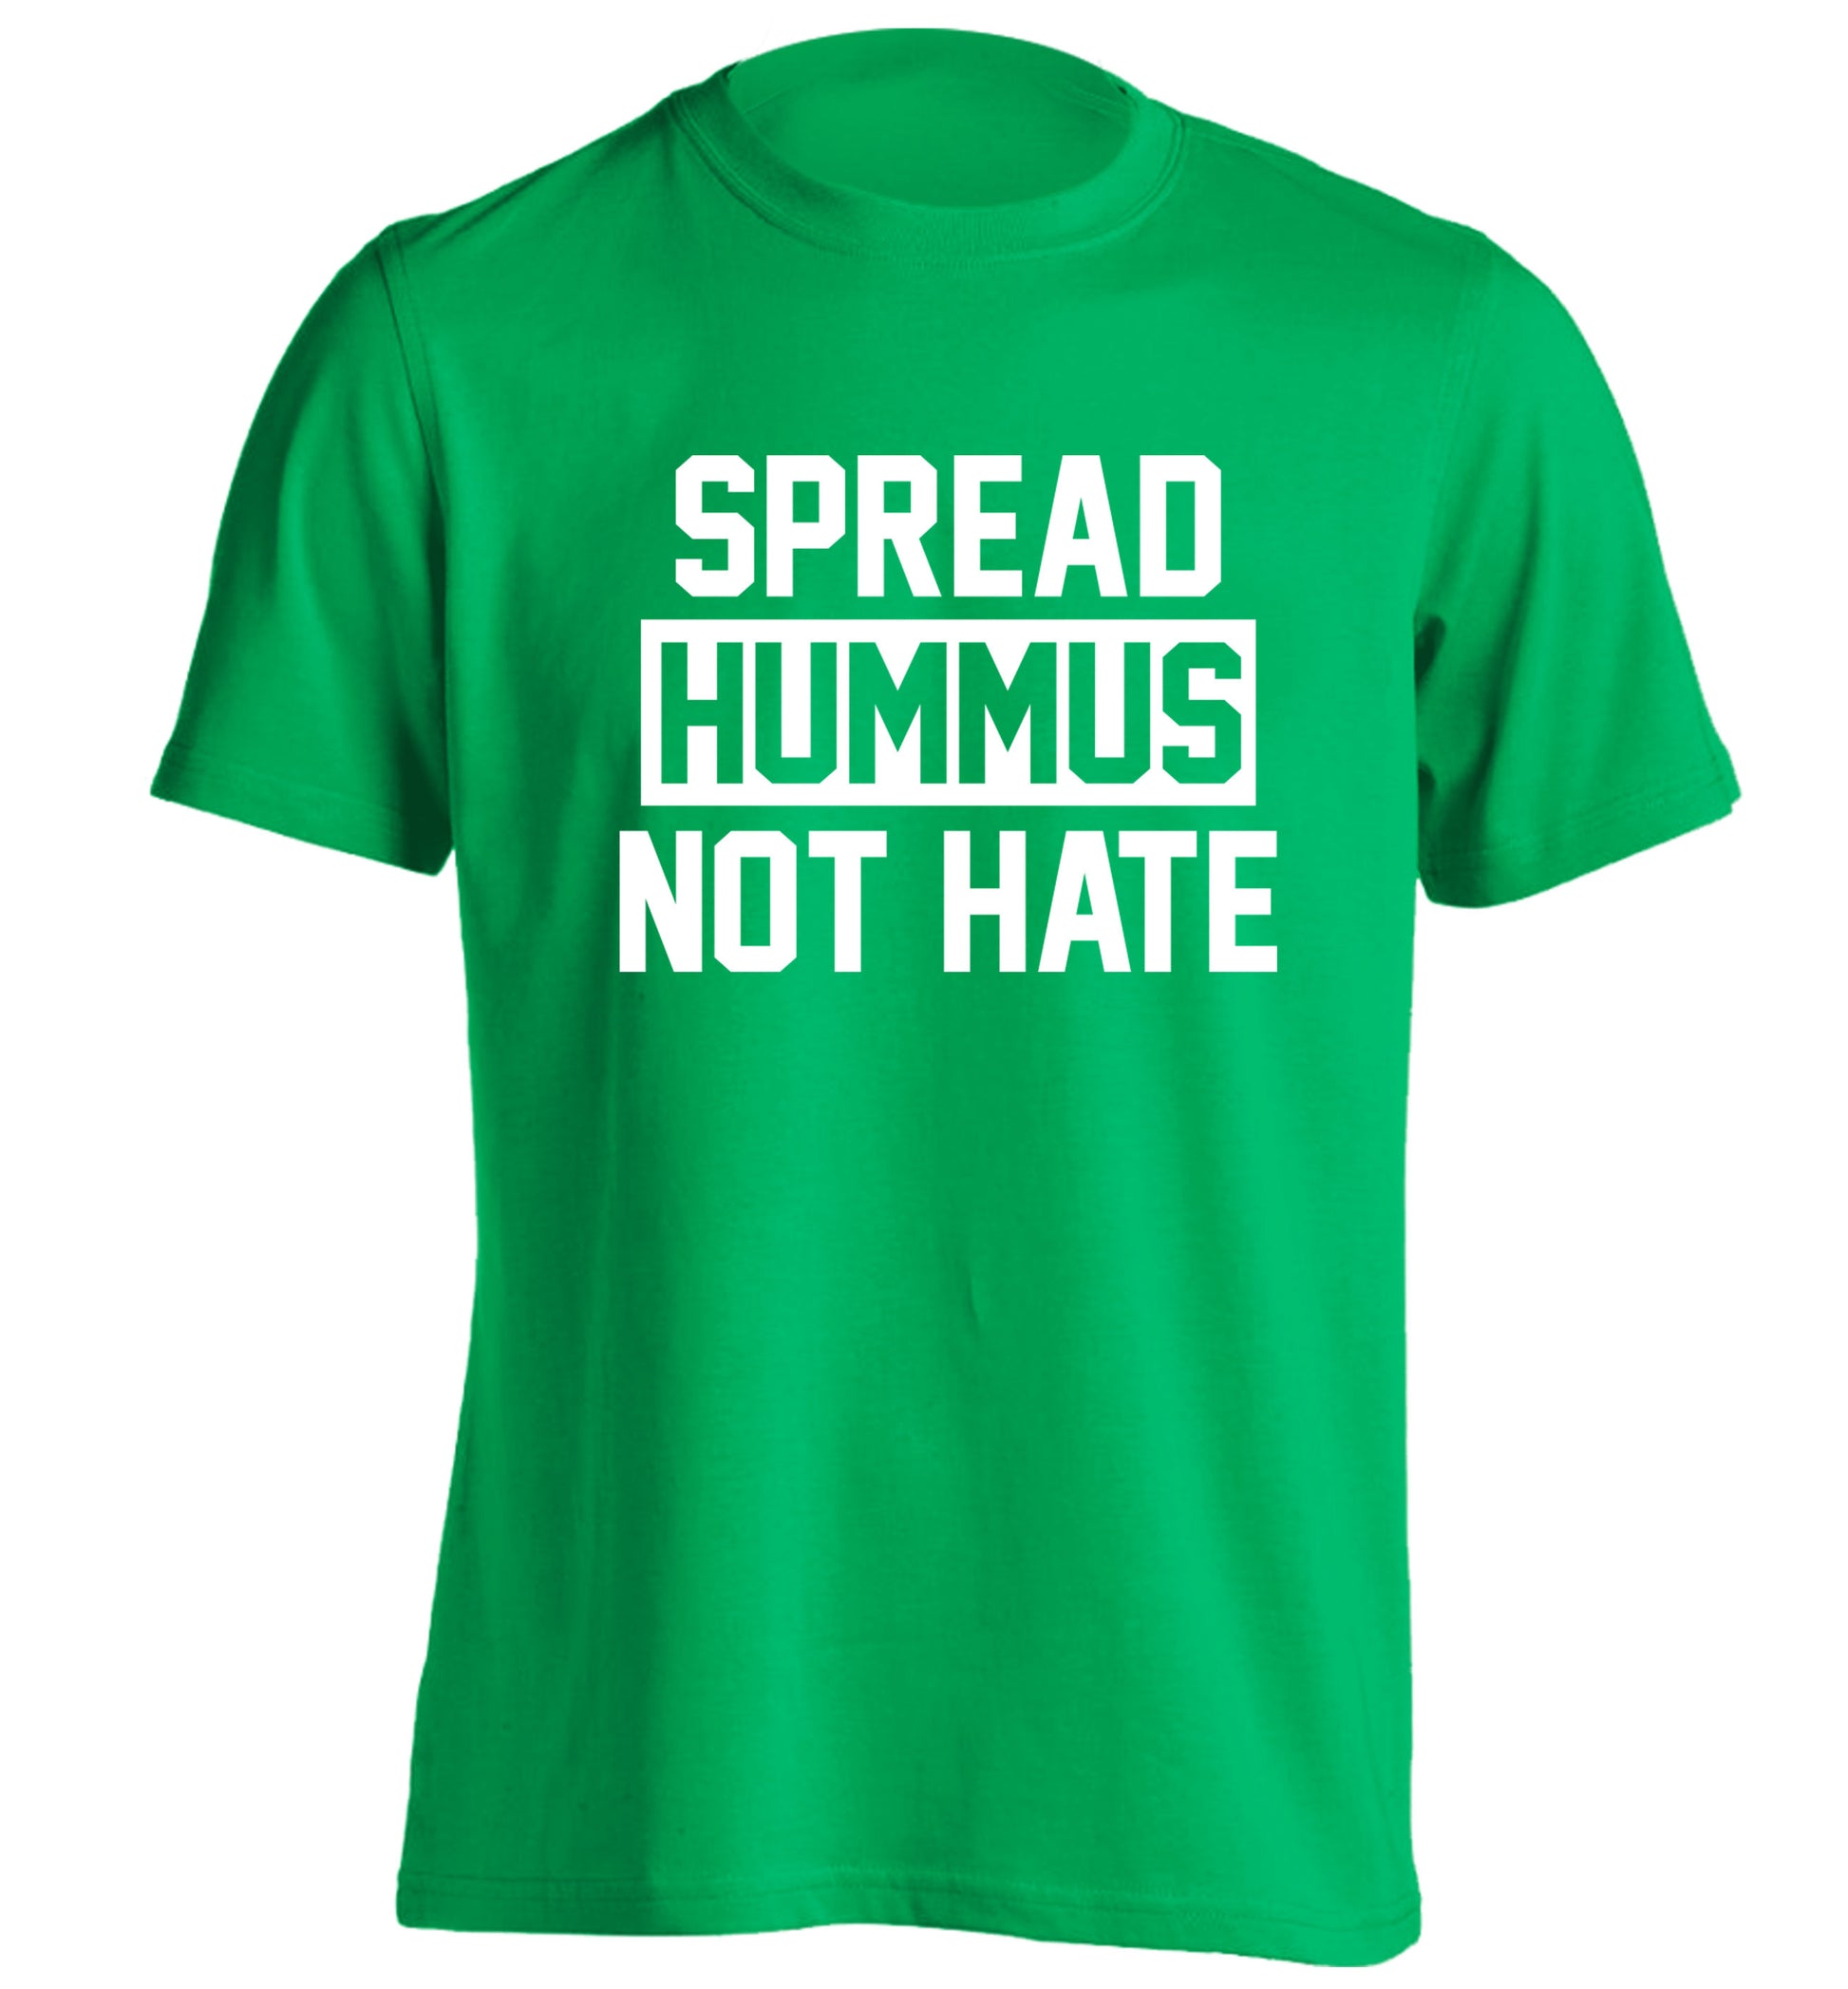 Spread hummus not hate adults unisex green Tshirt 2XL